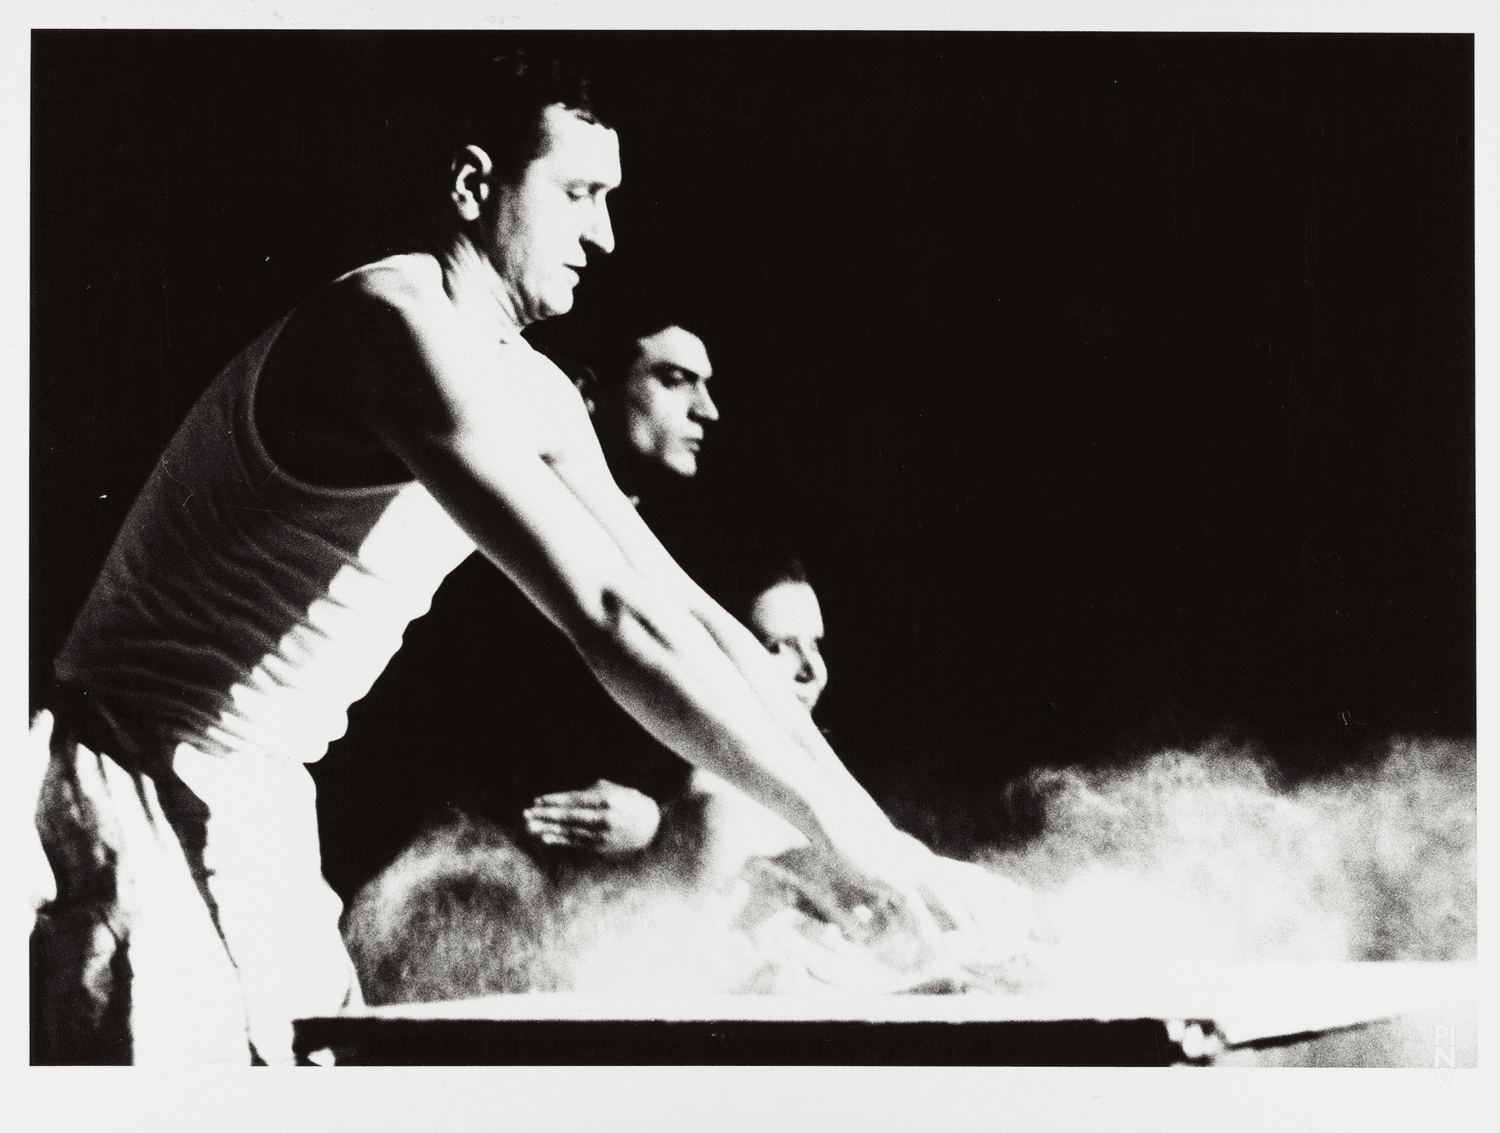 Jan Minařík, Antonio Carallo and Dominique Duszynski in “Two Cigarettes in the Dark” by Pina Bausch